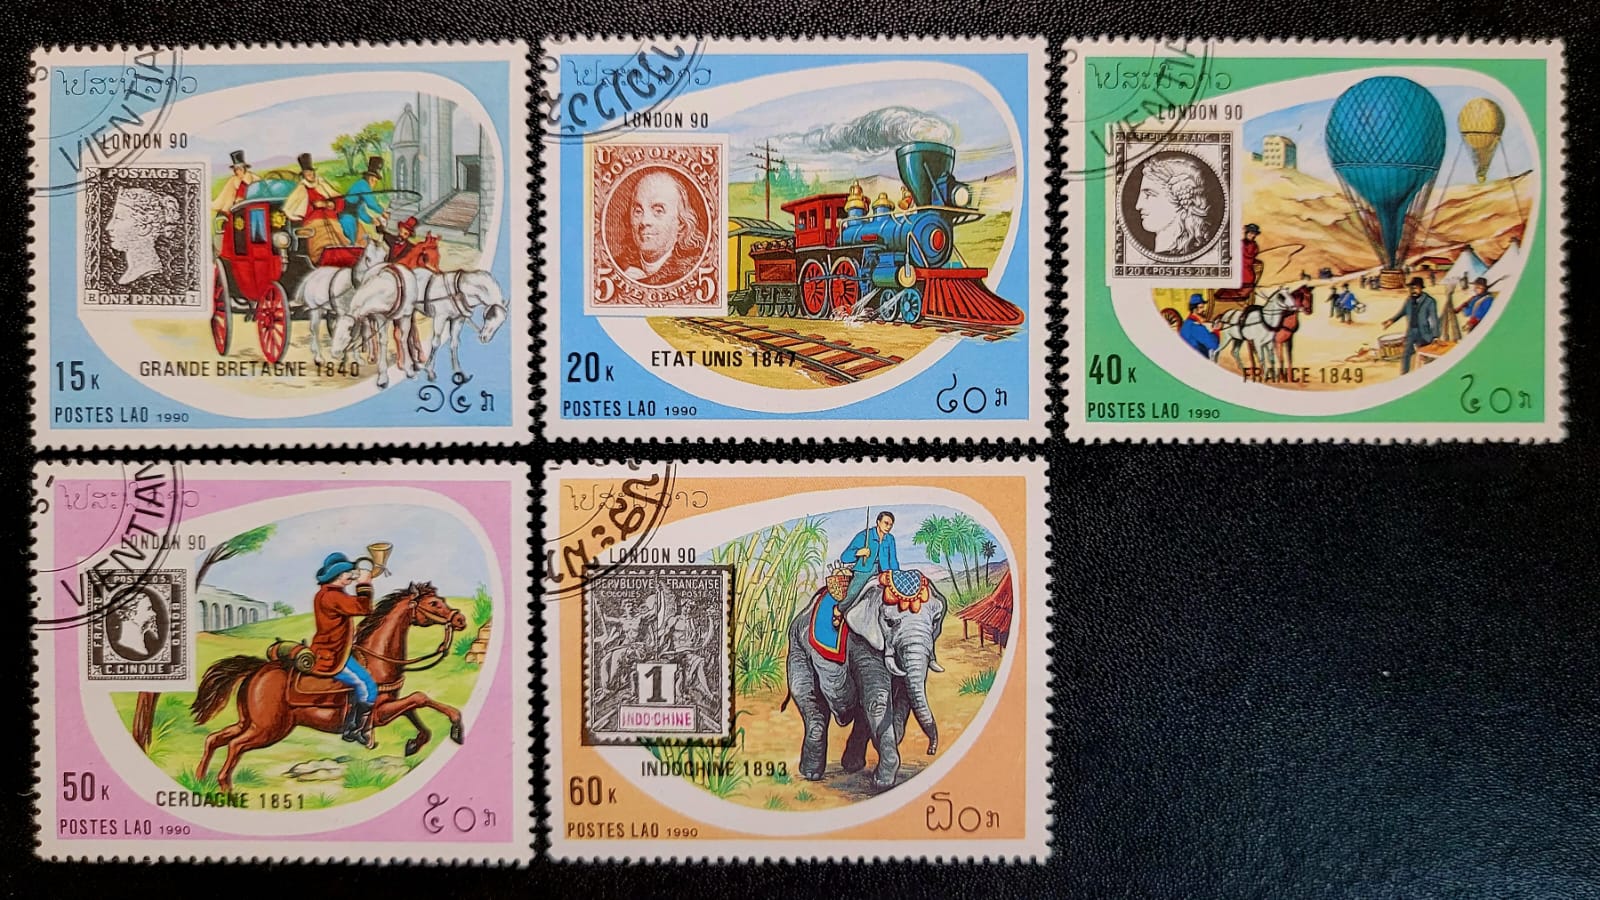 Selos Laos Exposicao Internacional de Selos Stamp World London 90 Londres Inglaterra 1 Casa do Colecionador